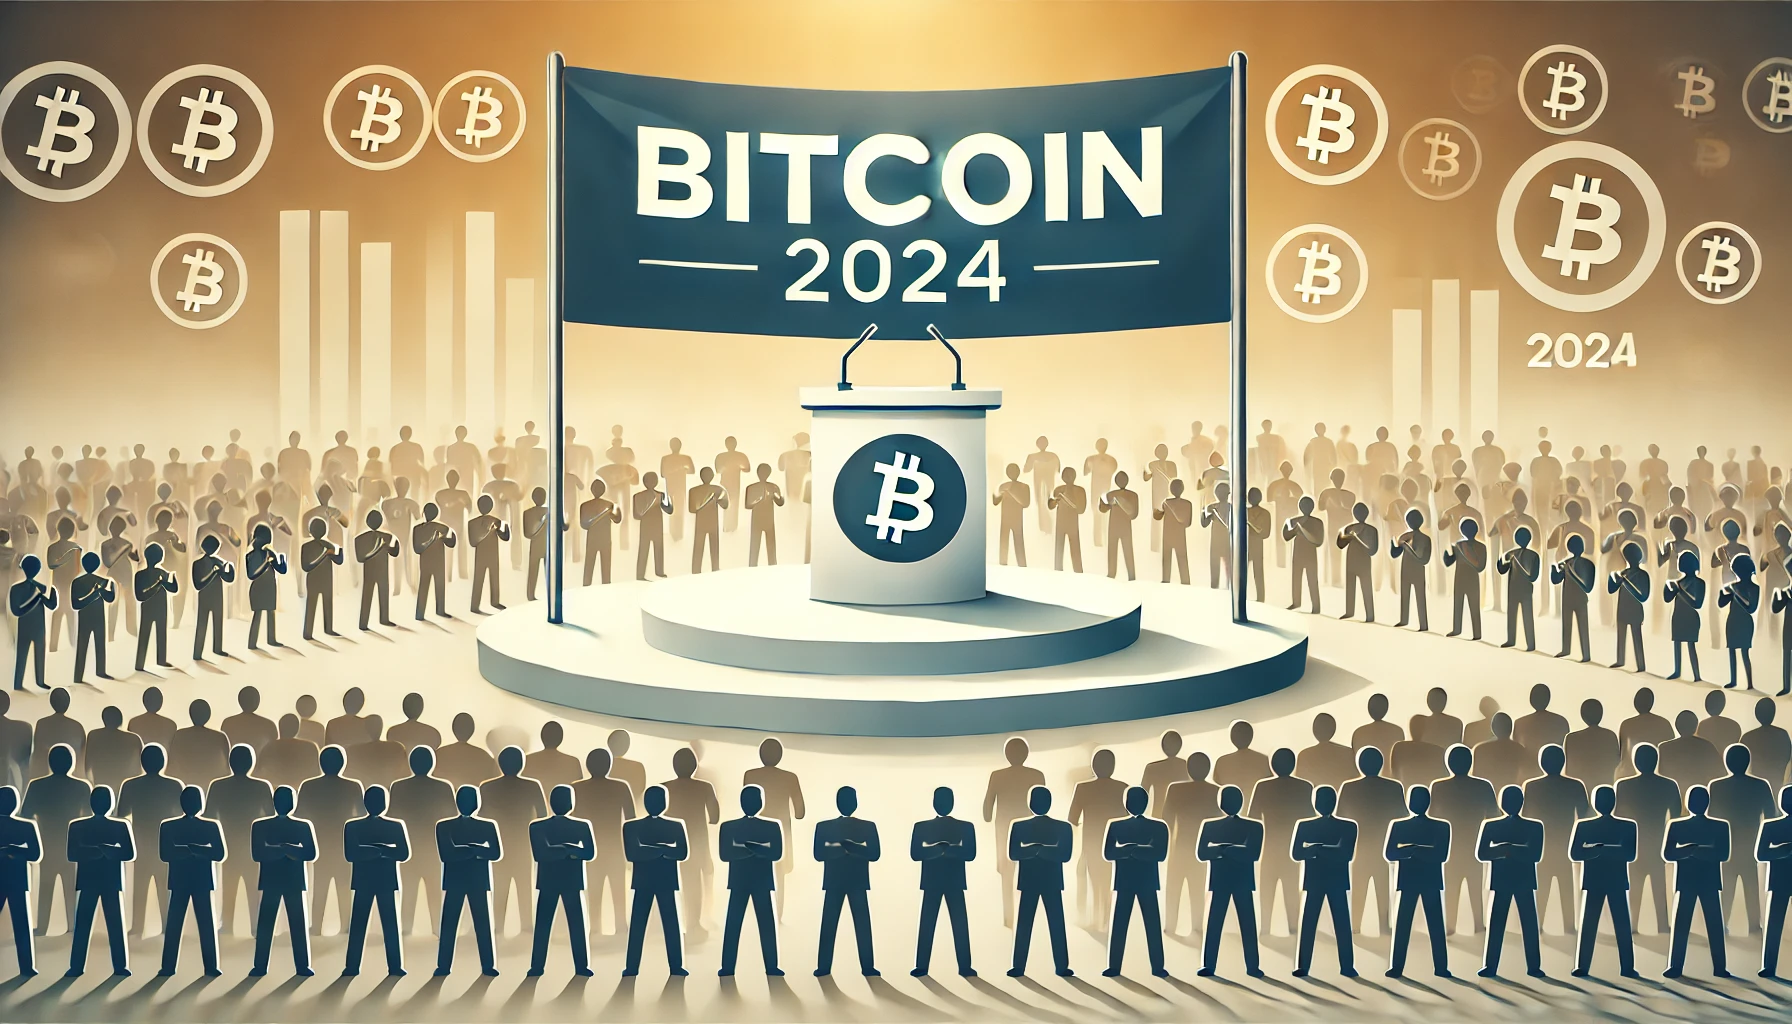 Bitcoin 2024 announces Donald Trump as speaker